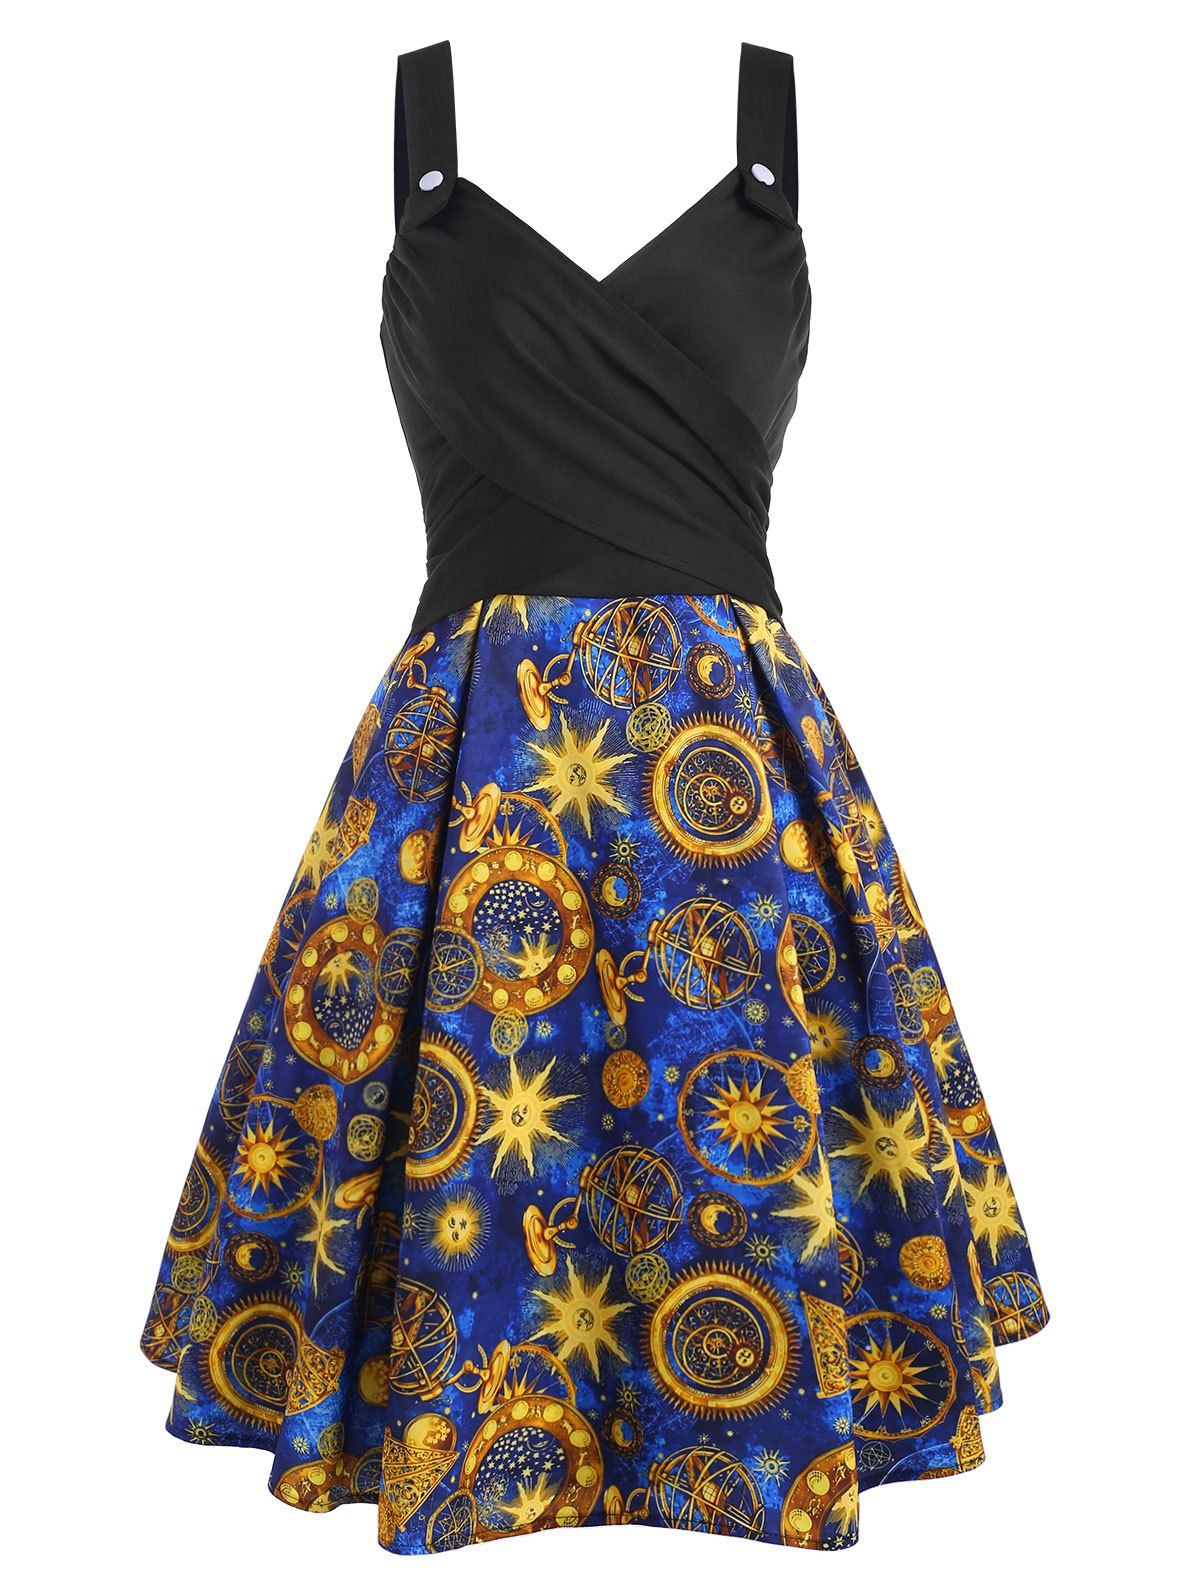 Retro Galaxy Sun Star Floral Print Crossover A Line Summer Dress - DEEP BLUE XL